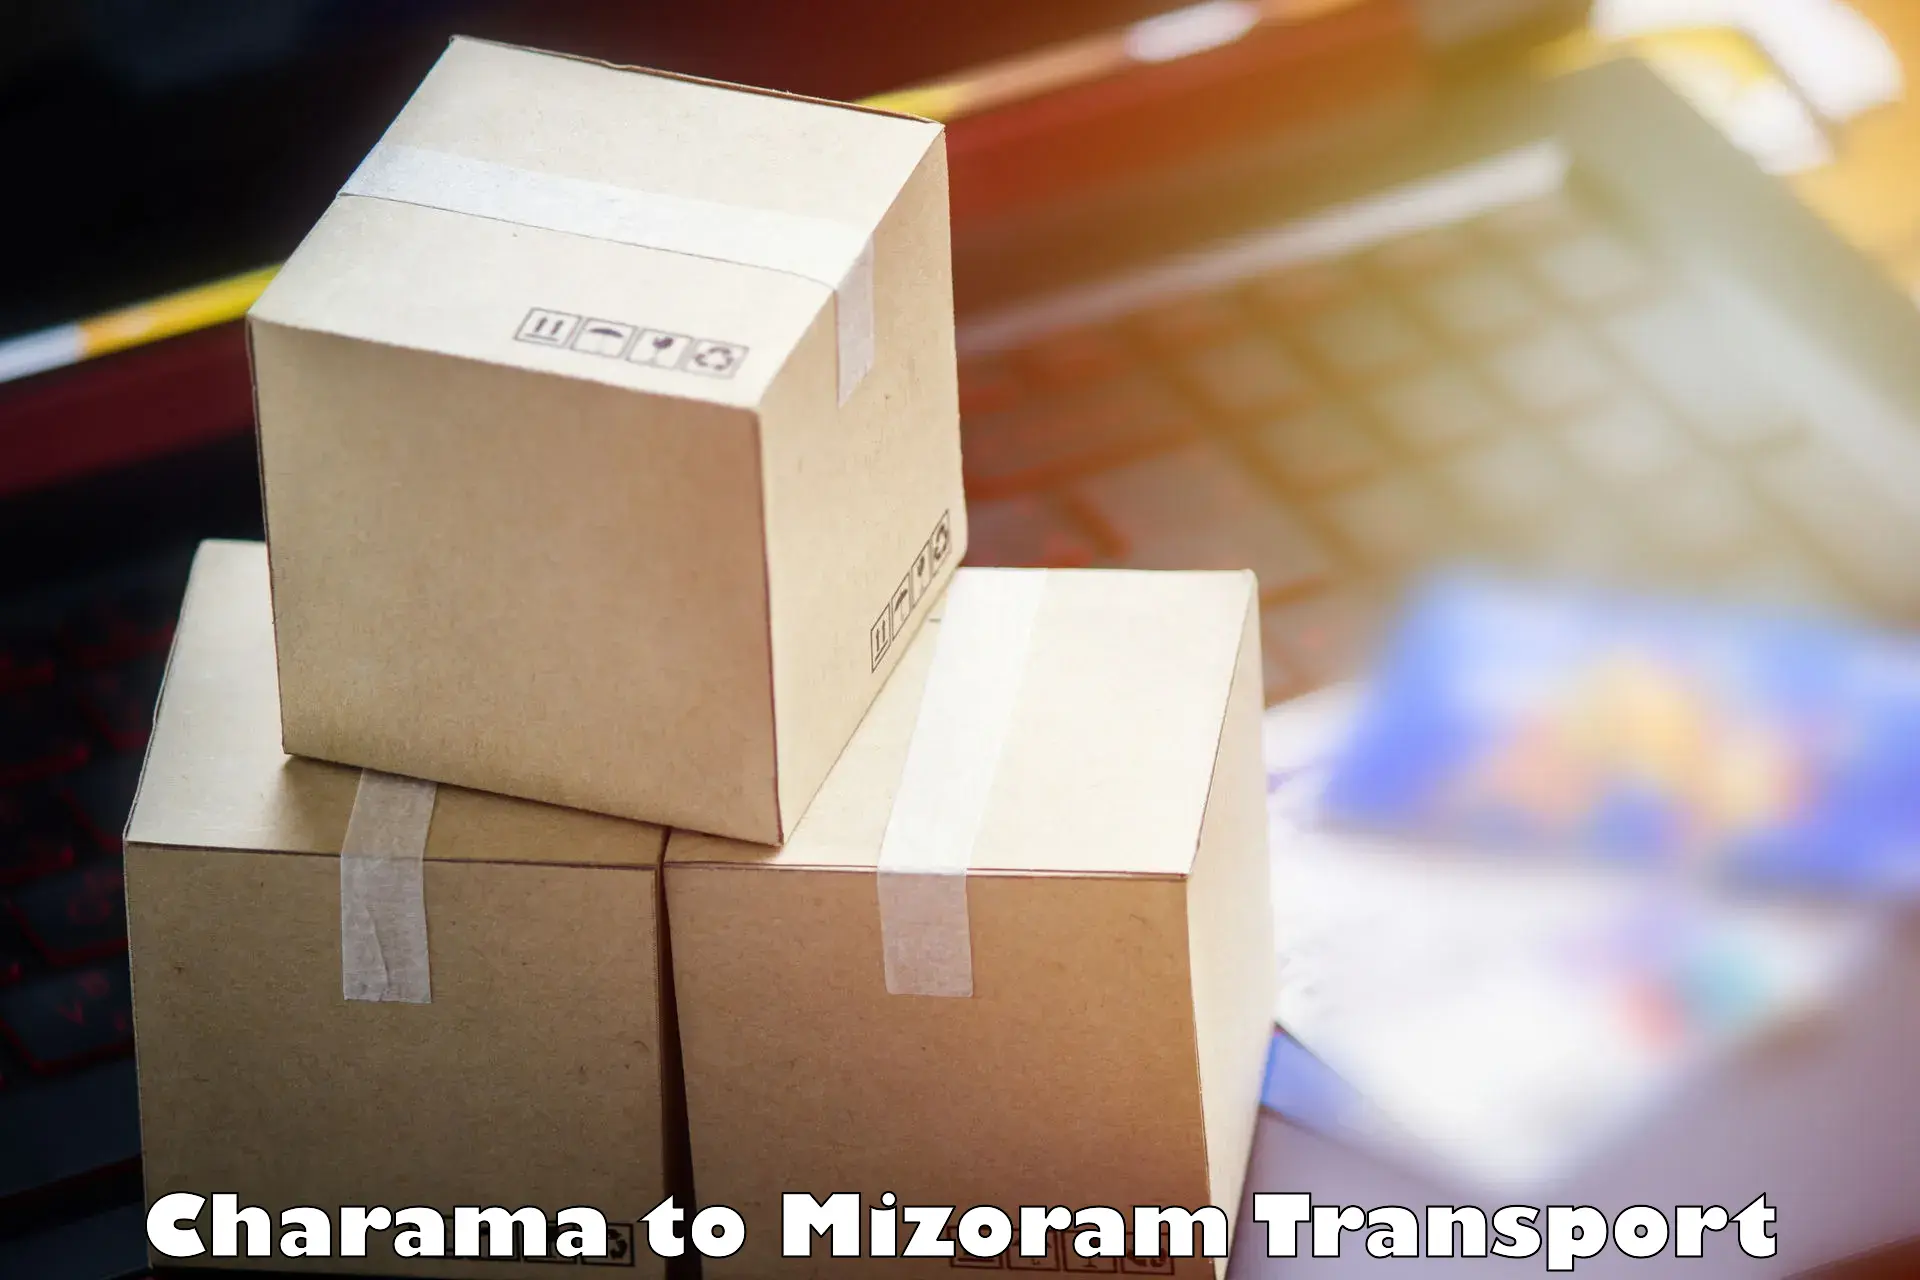 Container transport service Charama to Mizoram